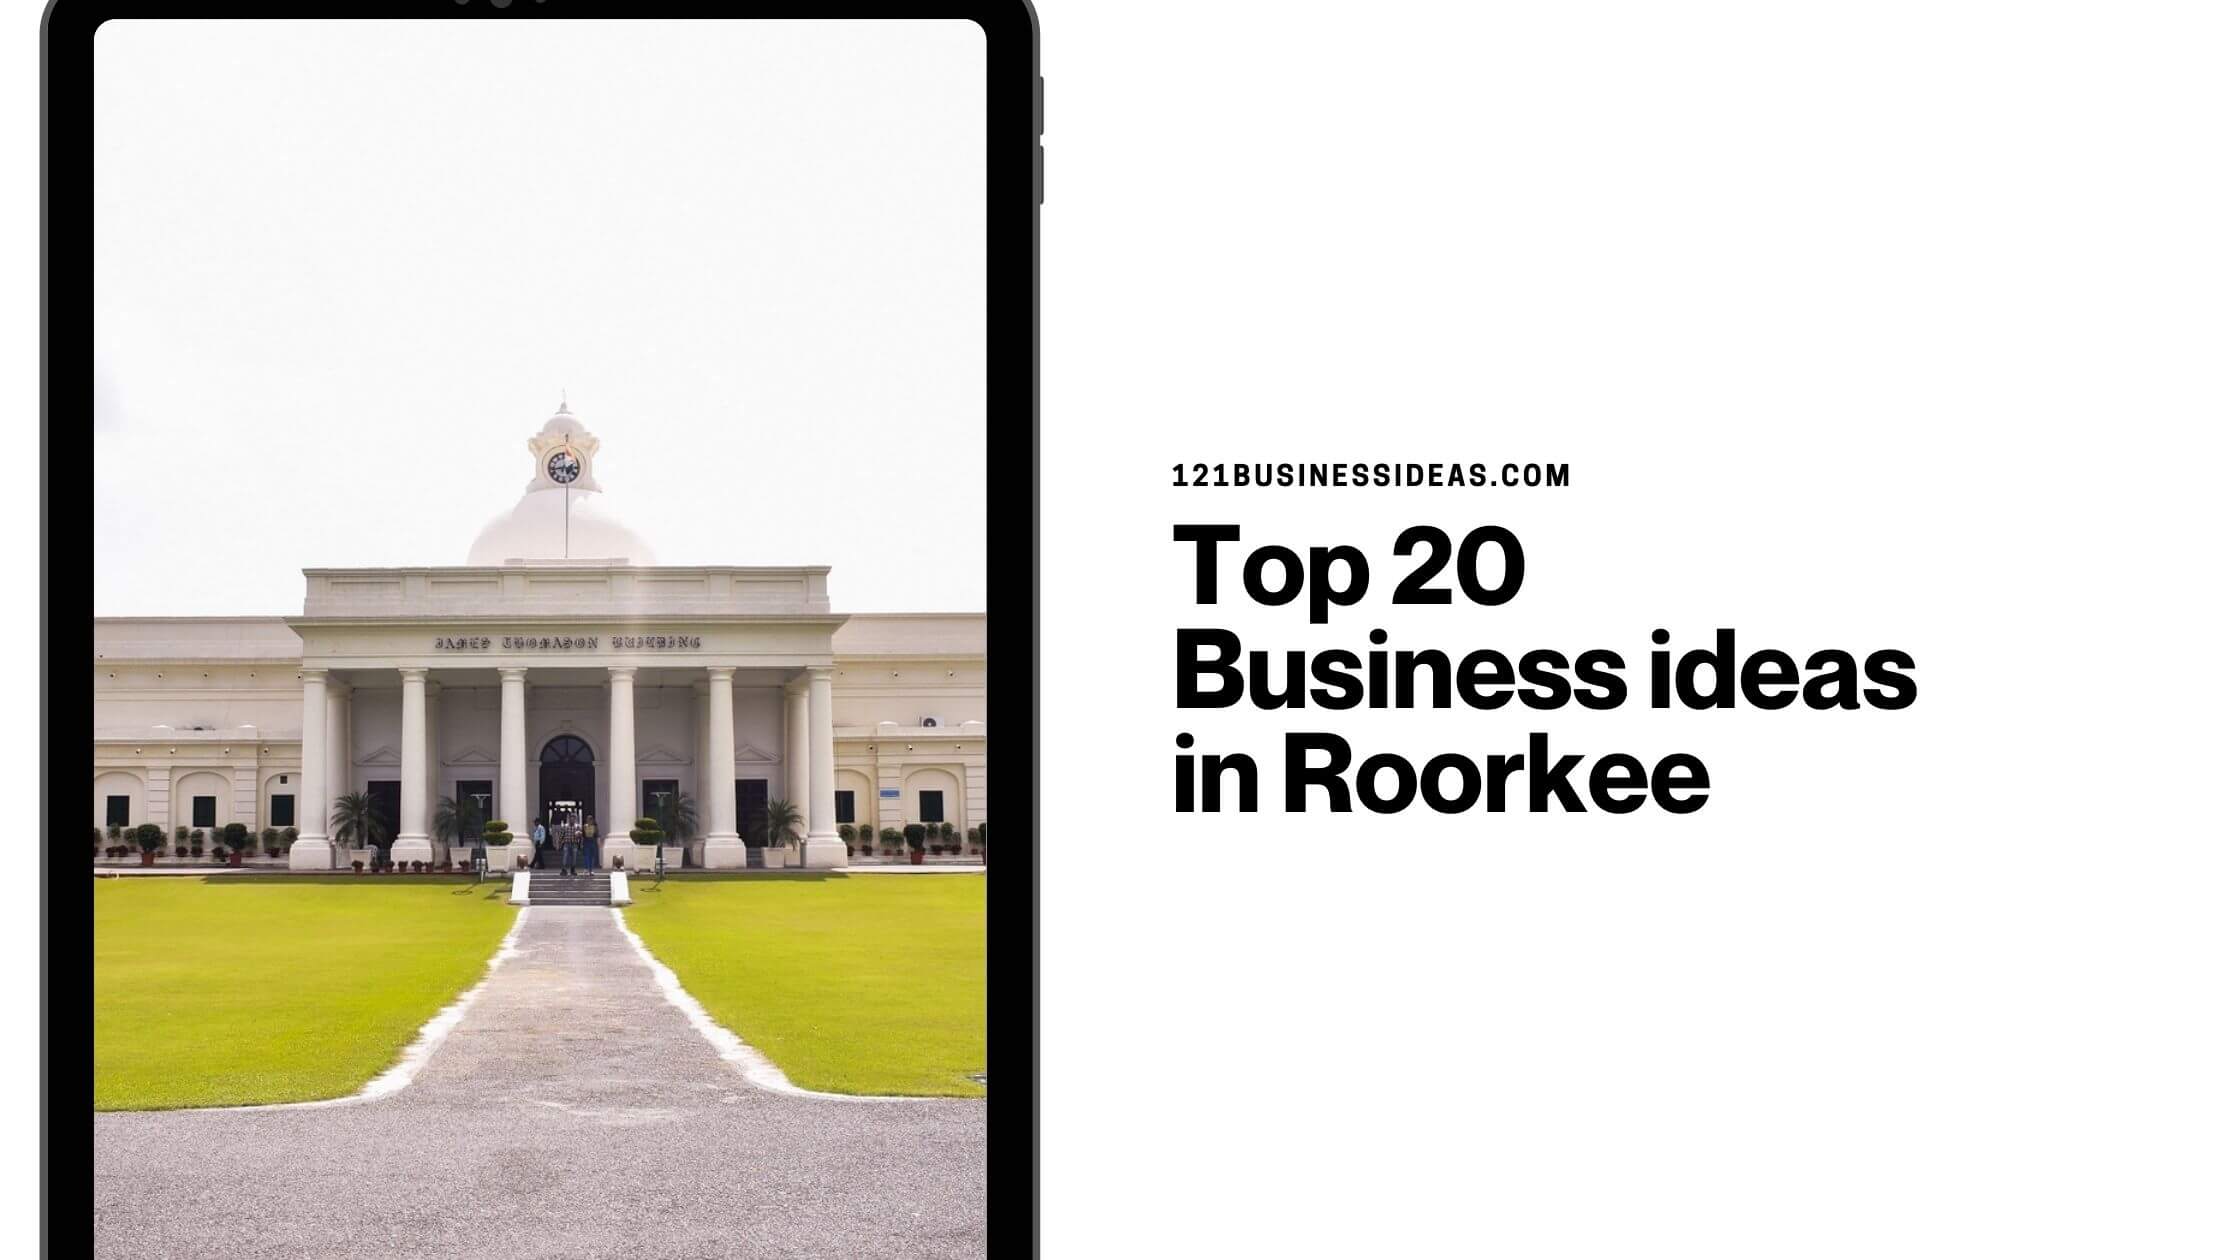 Top 20 Business ideas in Roorkee (1)